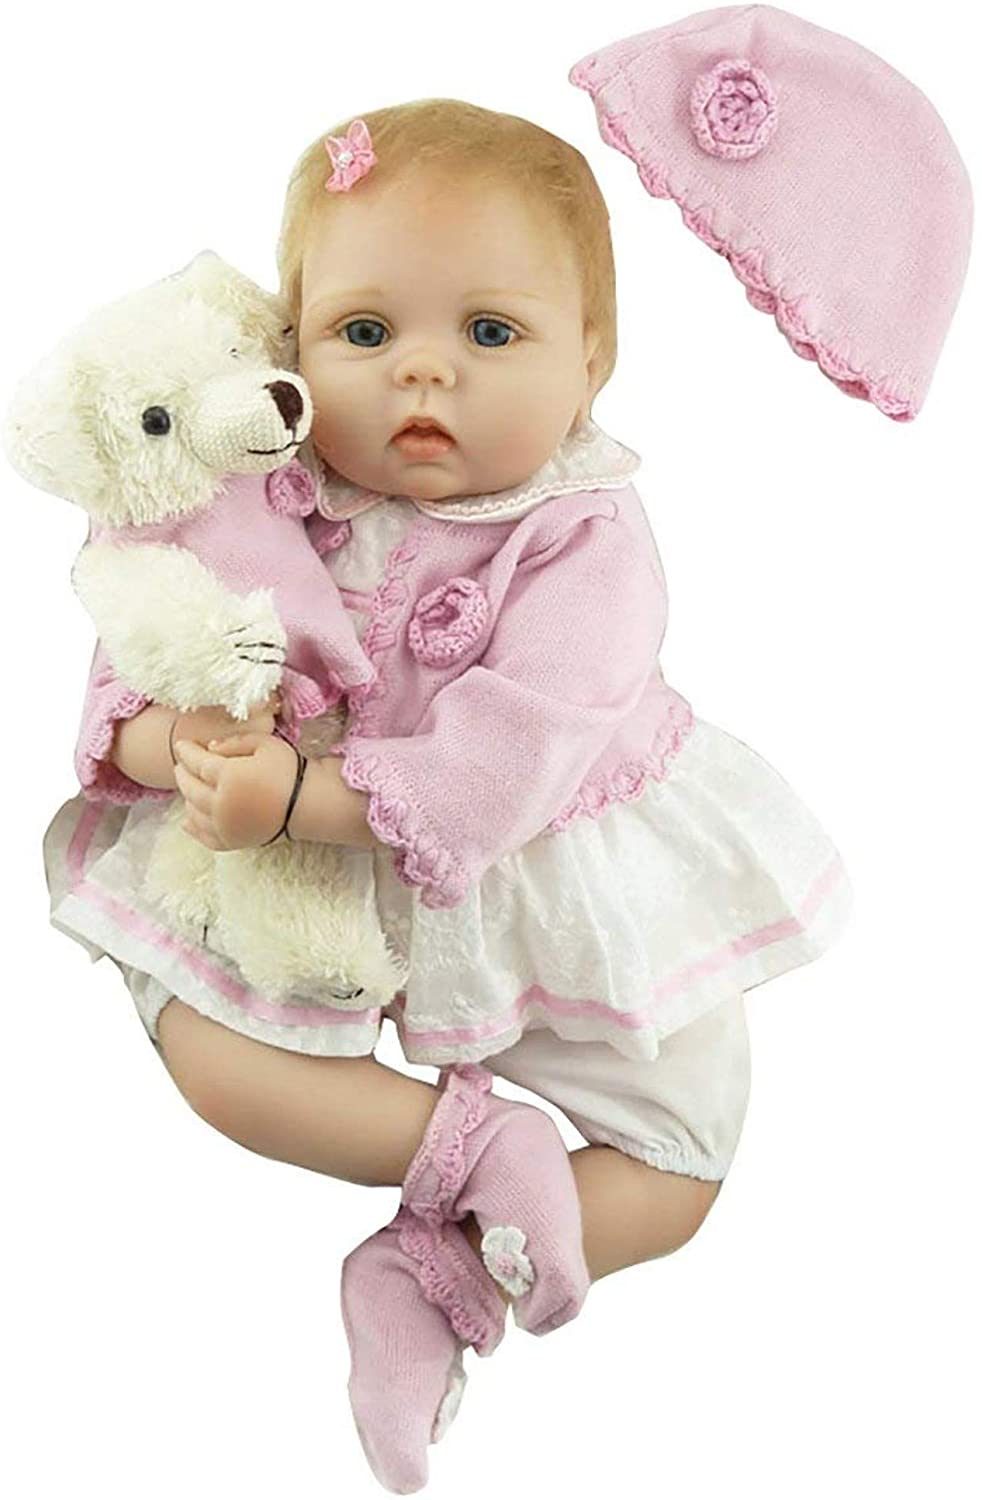 Reborn Babies 22 inch 55cm Soft Vinyl Silicone Baby Reborn Dolls Realistic Newborn Baby Dolls With A Little Bear Toy Figure